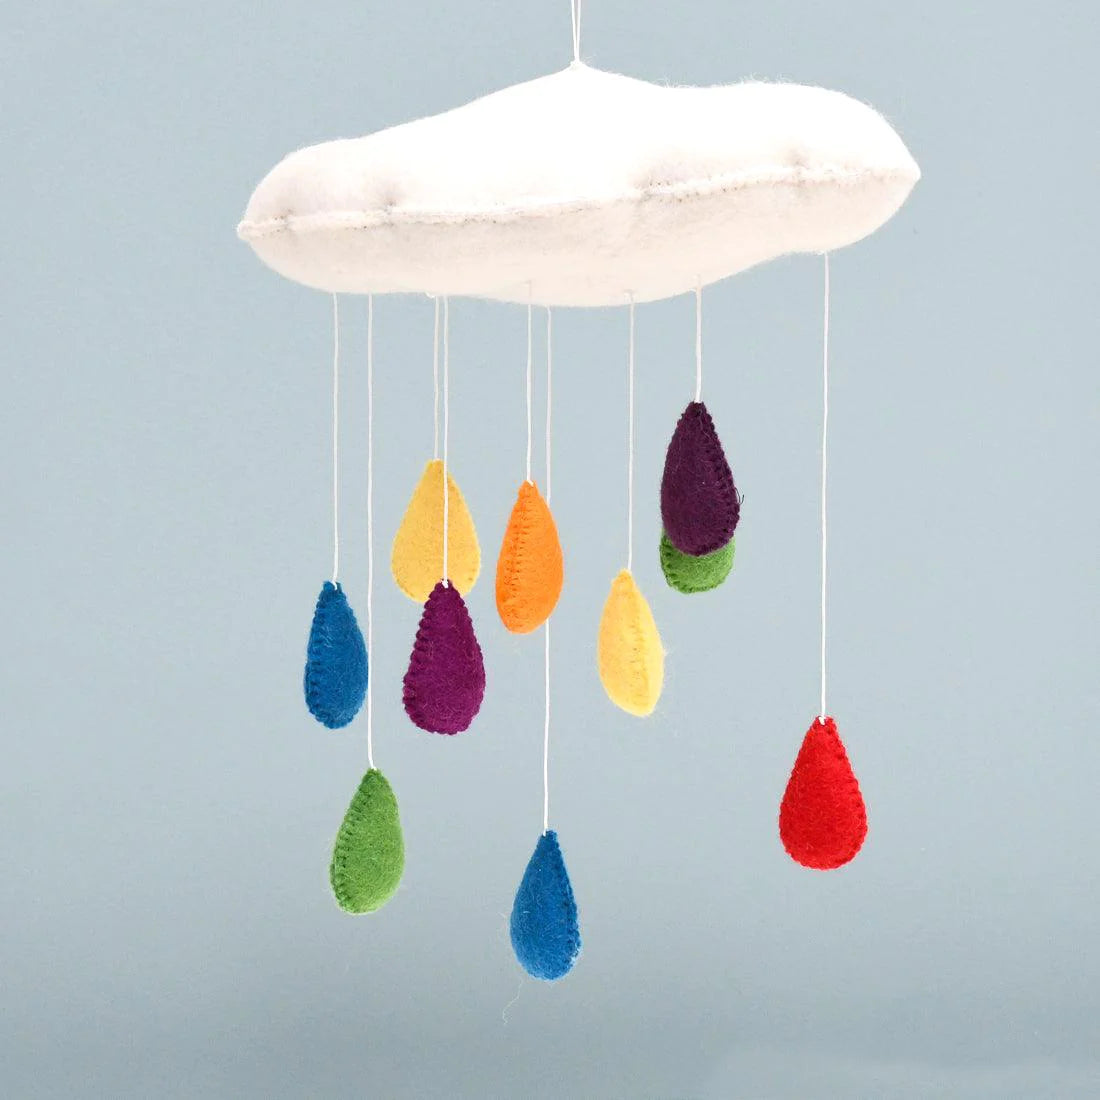 Tara Treasures - Cloud Mobile with Colourful Raindrops